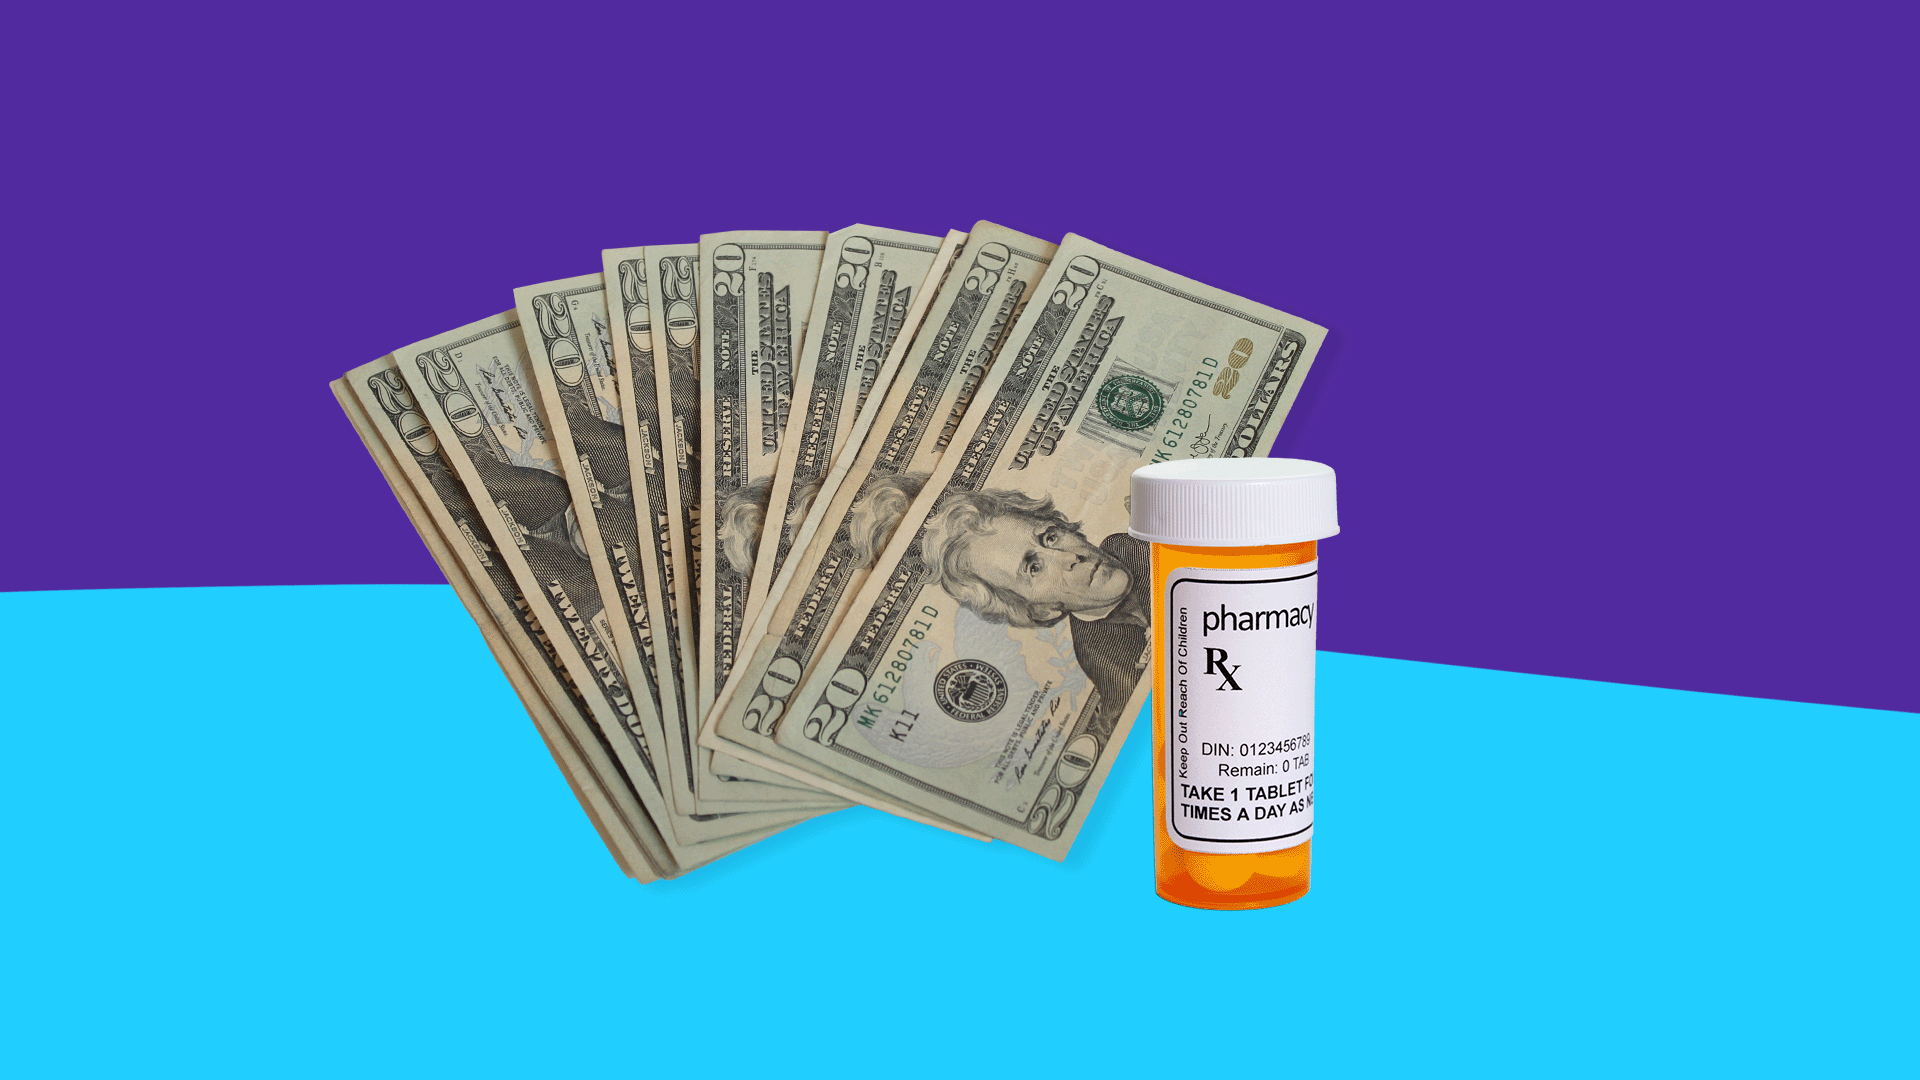 Rx pill bottle and $20 bills - Vyvanse savings